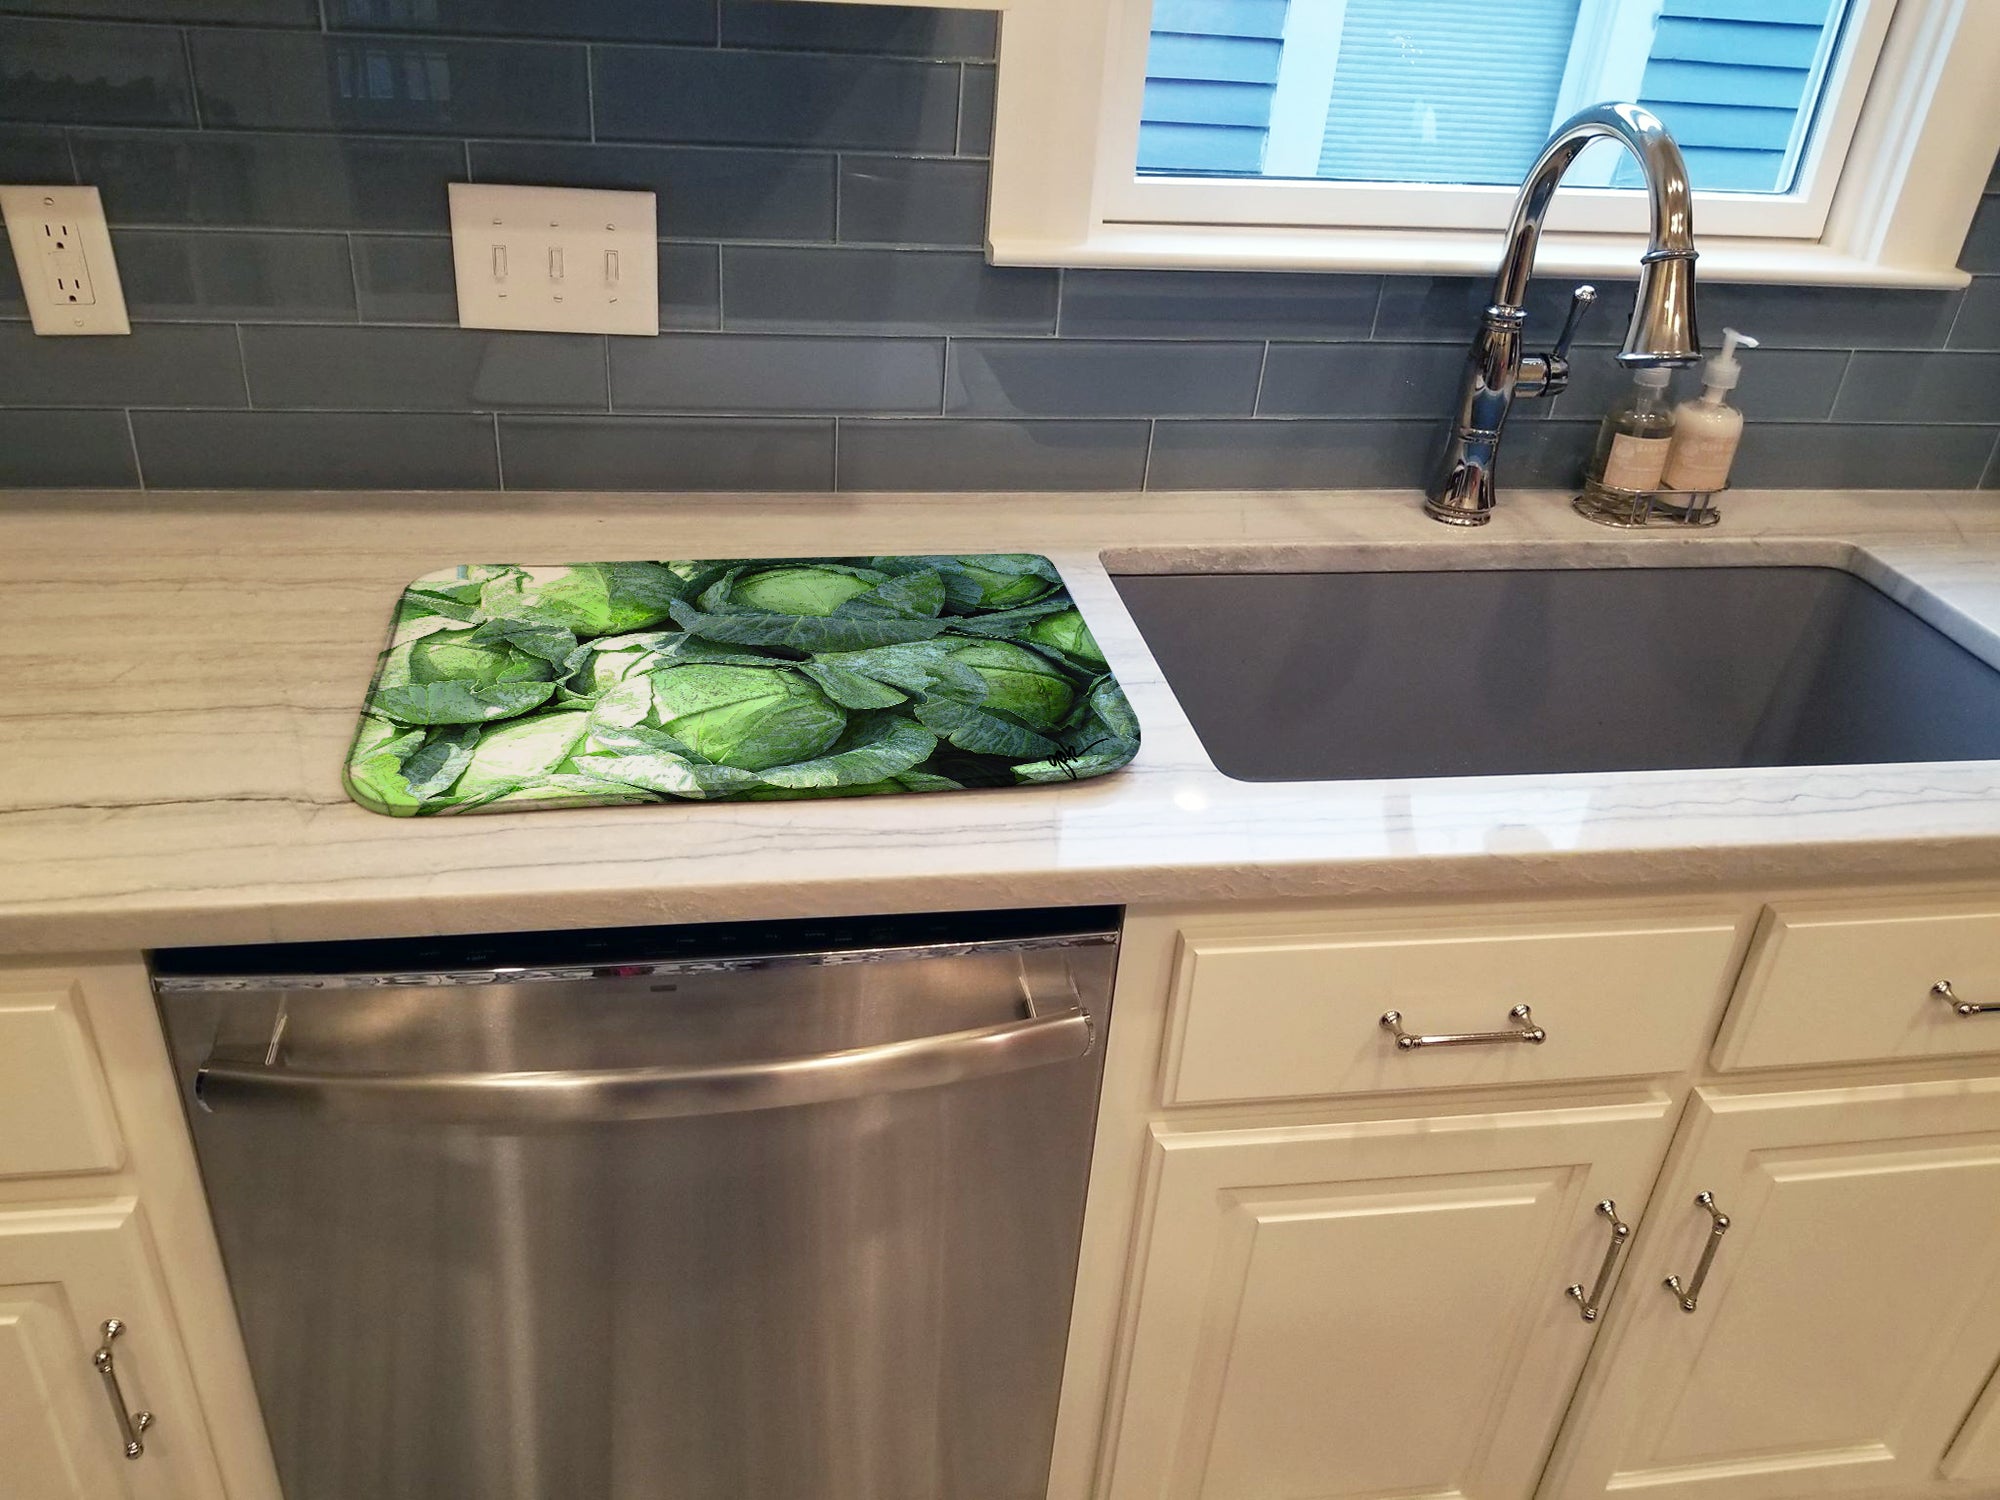 Cabbage by Gary Kwiatek Dish Drying Mat